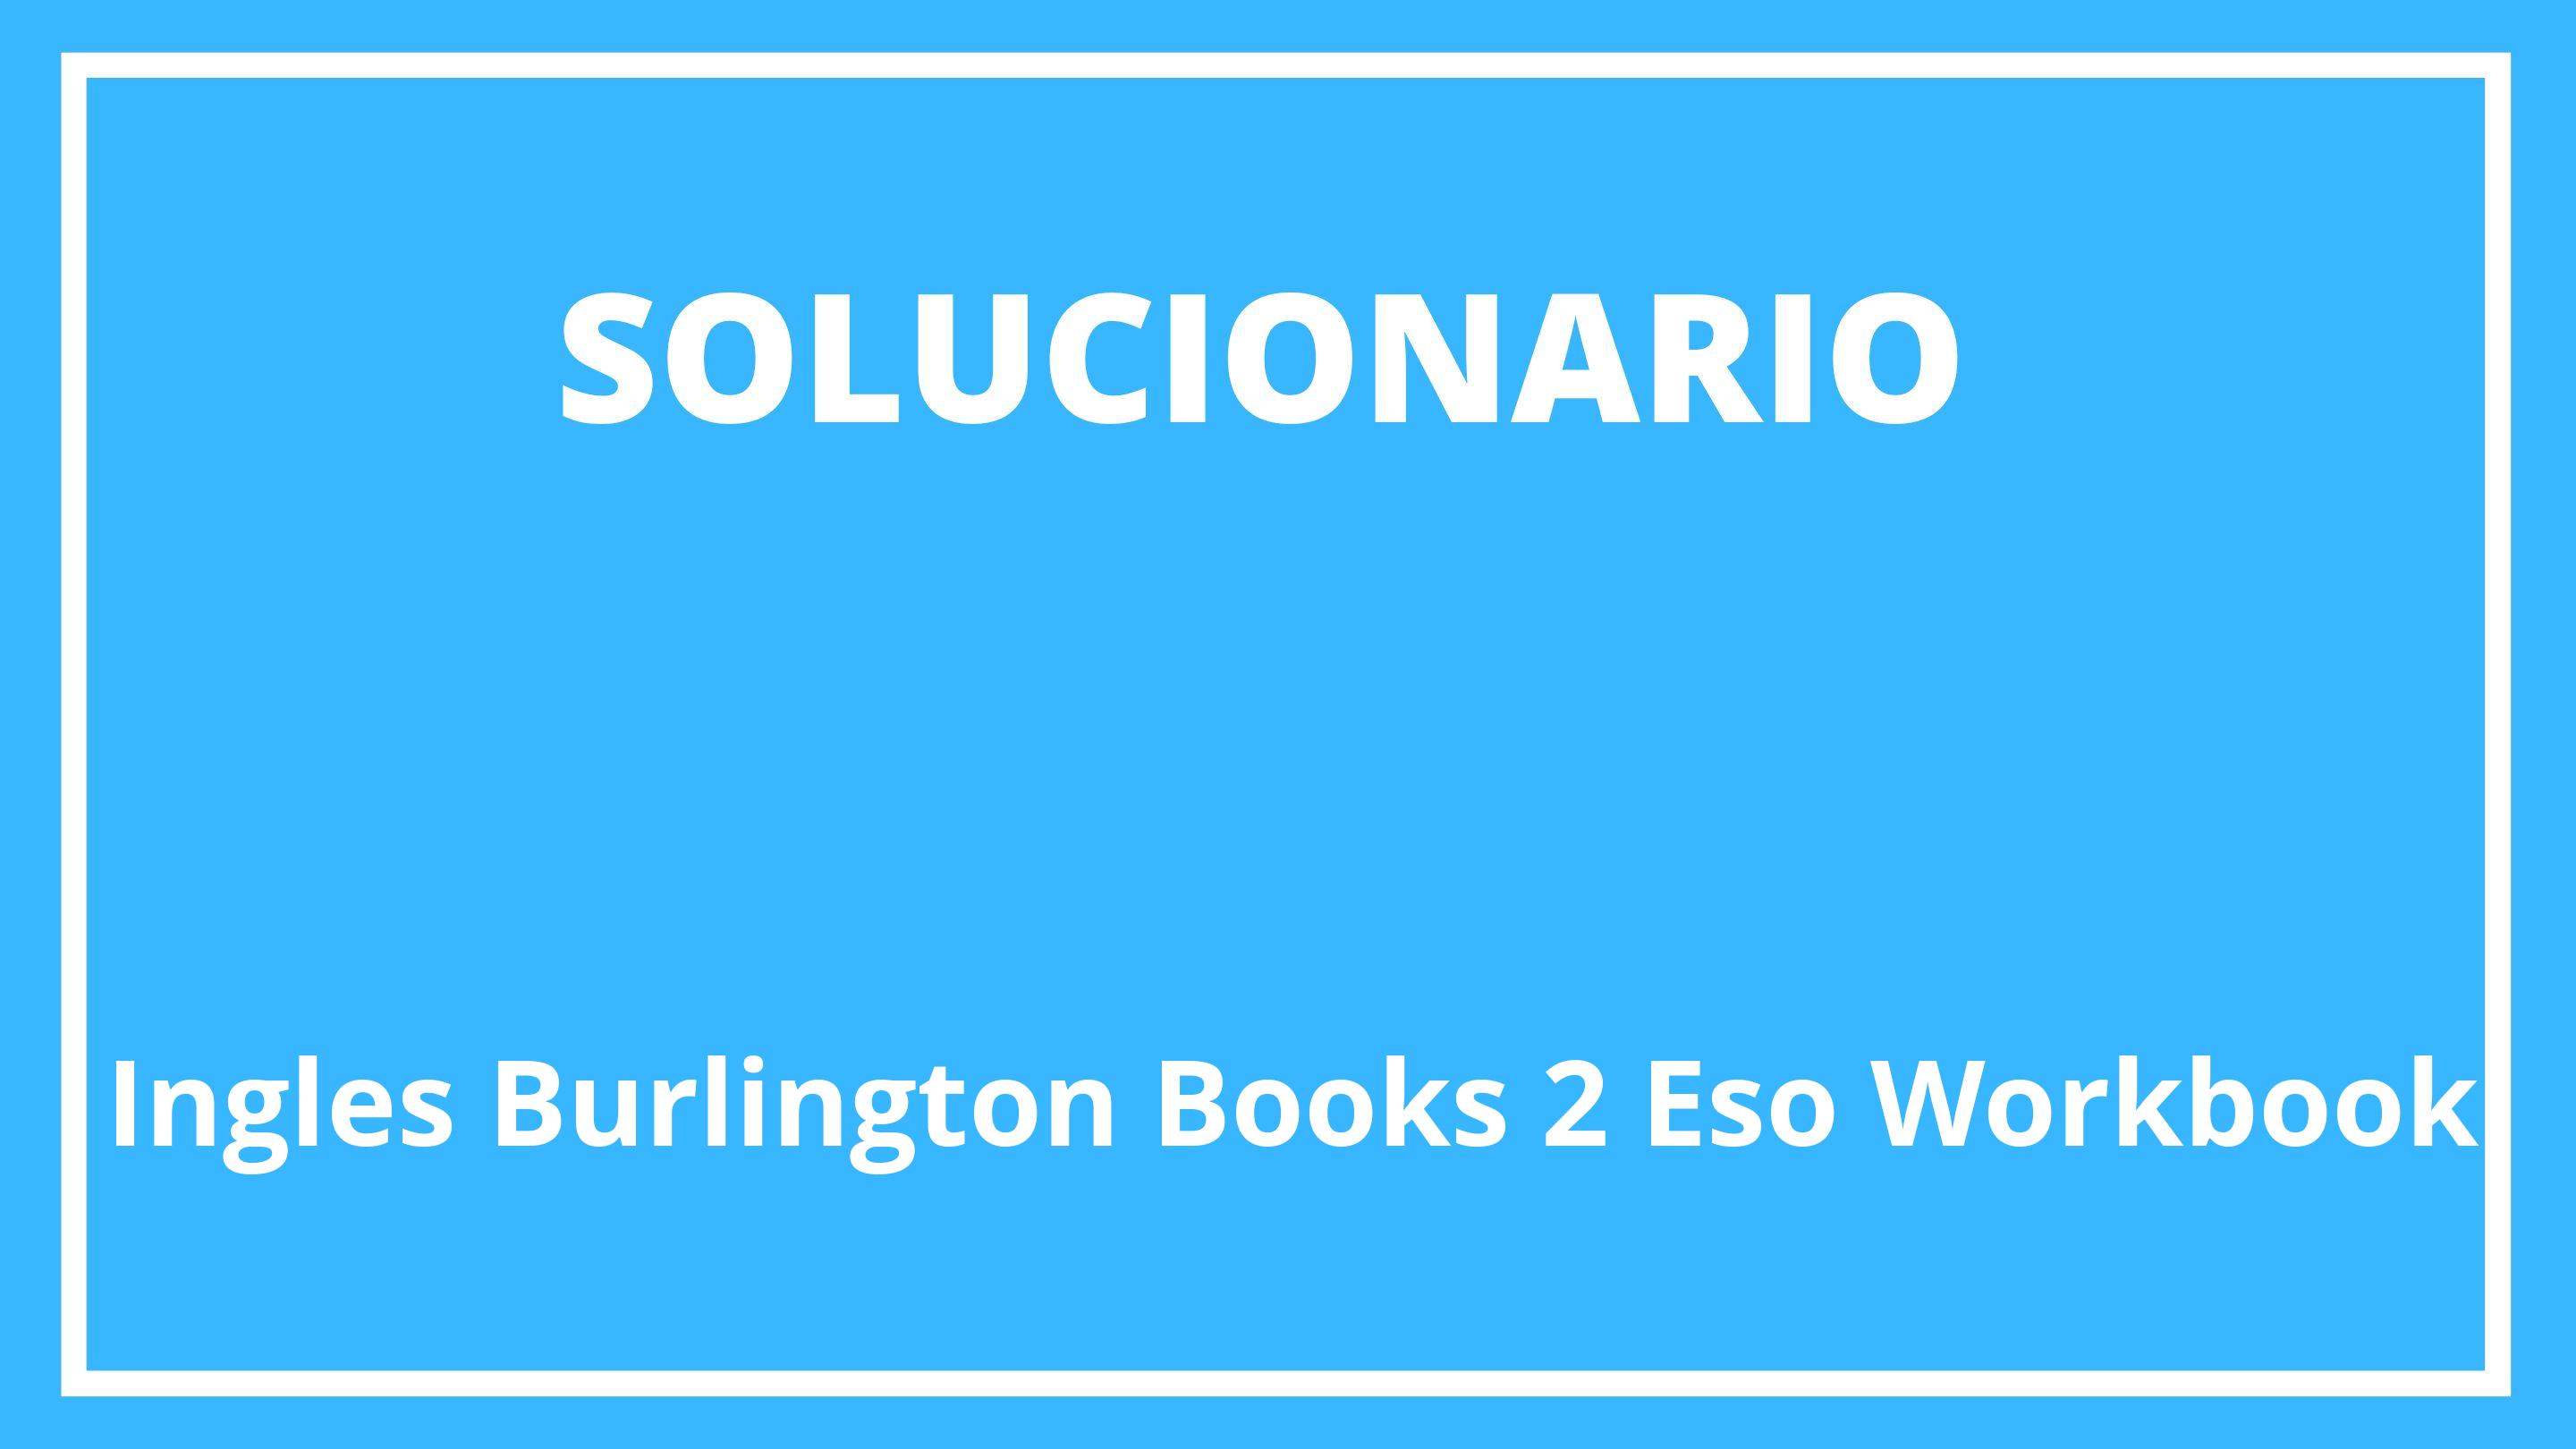 Solucionario Ingles Burlington Books 2 Eso Workbook